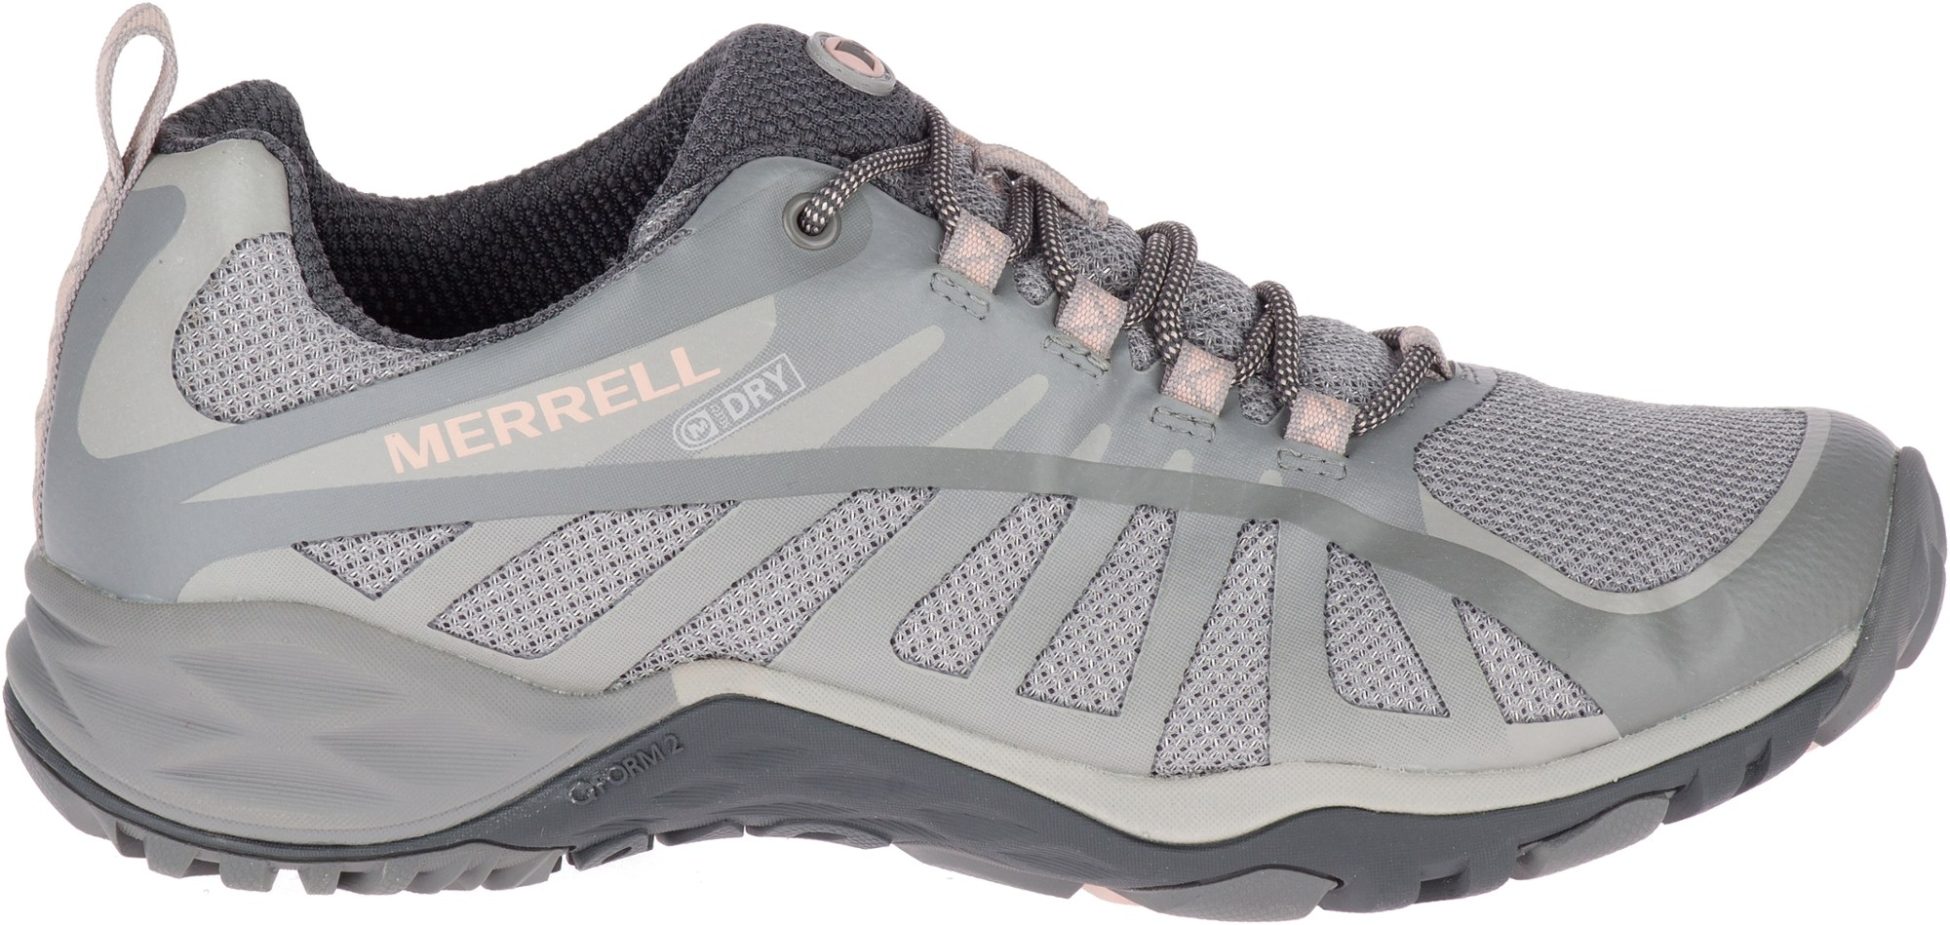 merrell women's siren edge waterproof hiking shoe